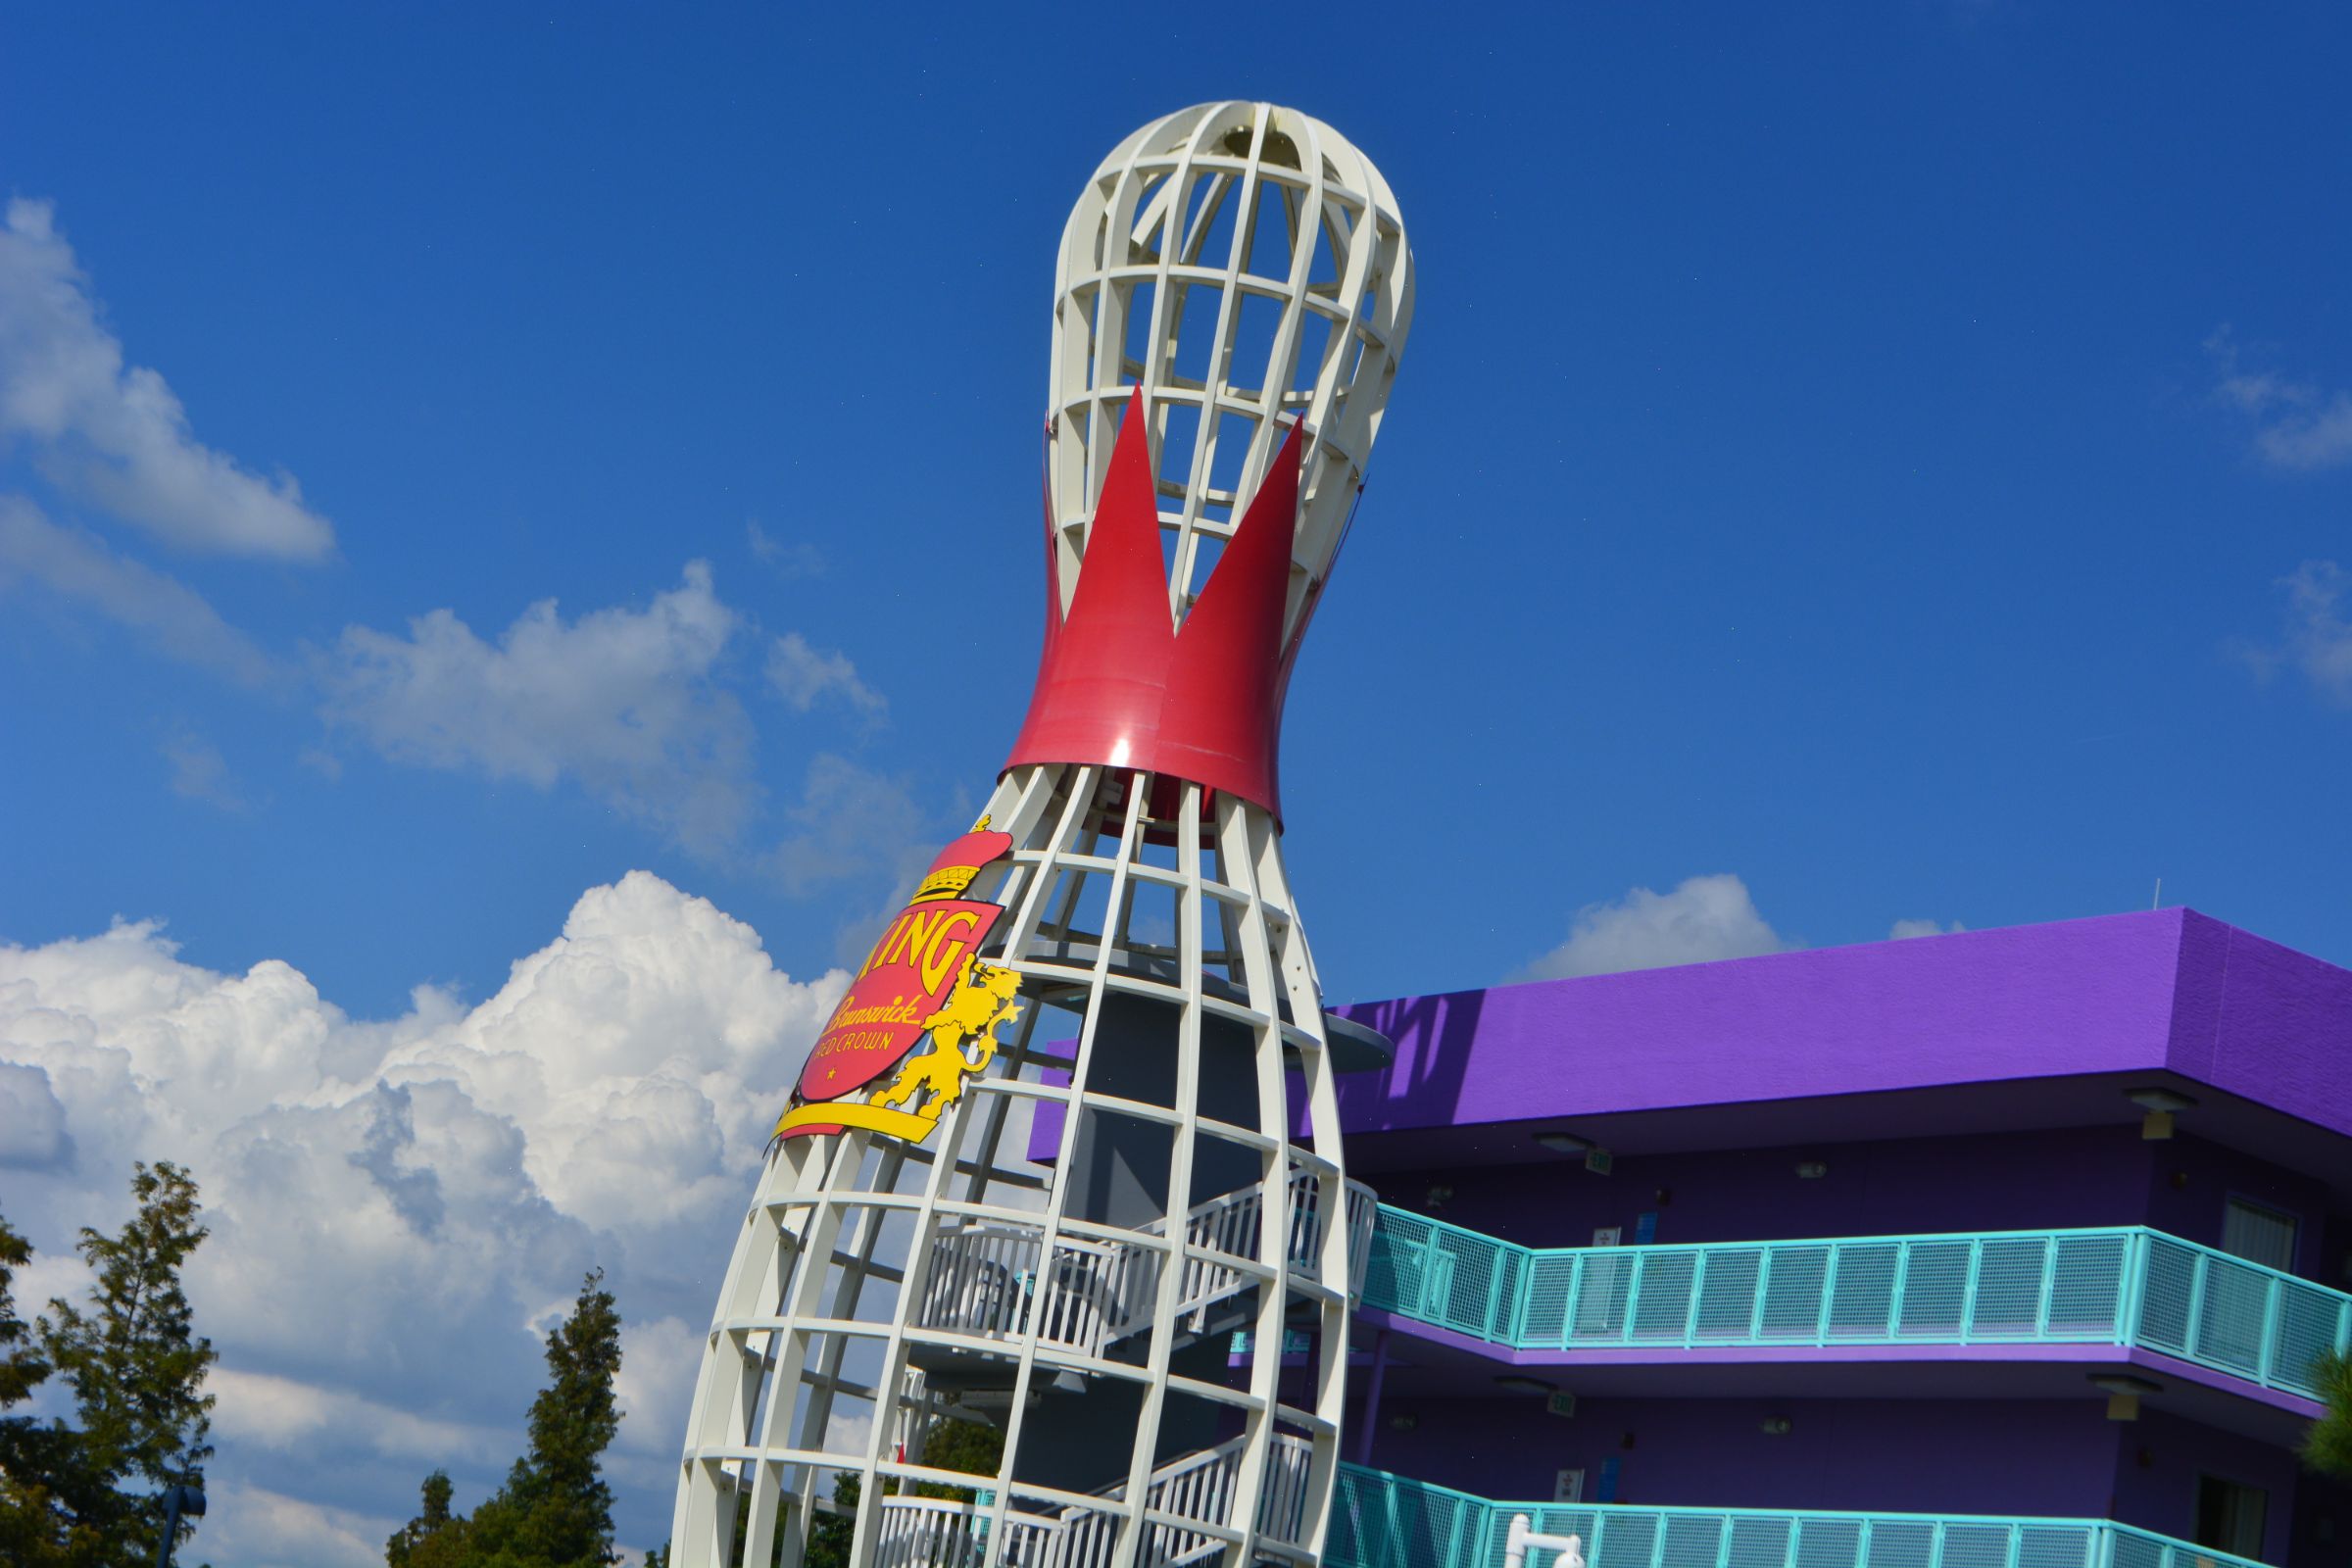 Walt Disney World Pop Century Resort Shadow Box Tour - Official Full Tour